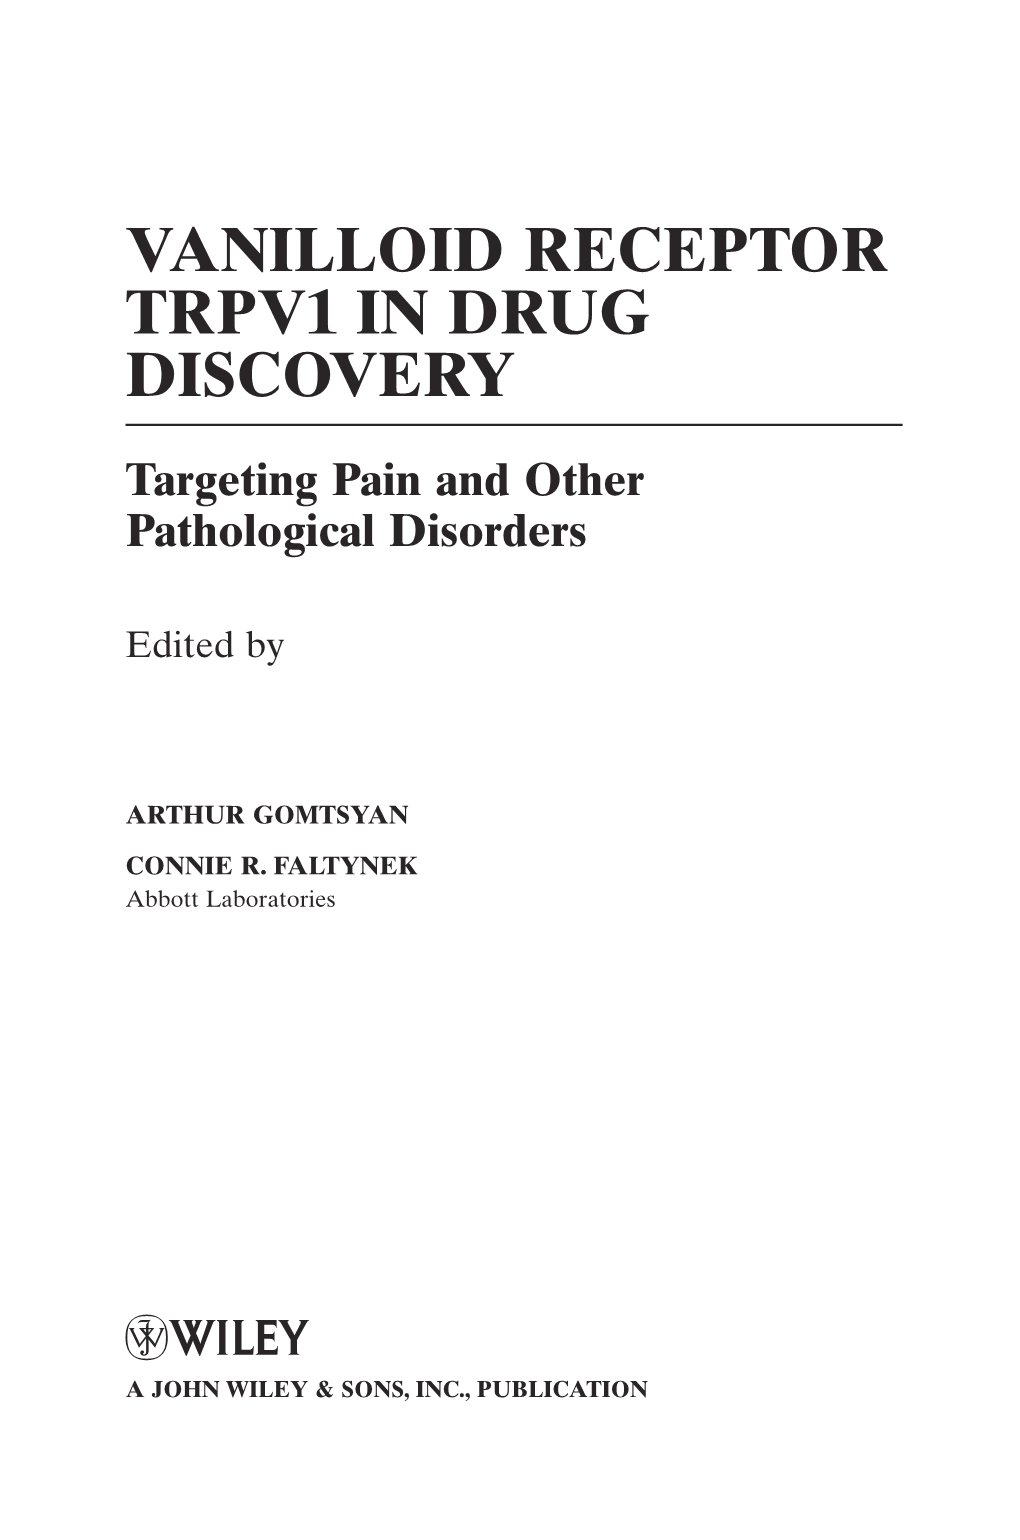 Vanilloid Receptor Trpv1 in Drug Discovery